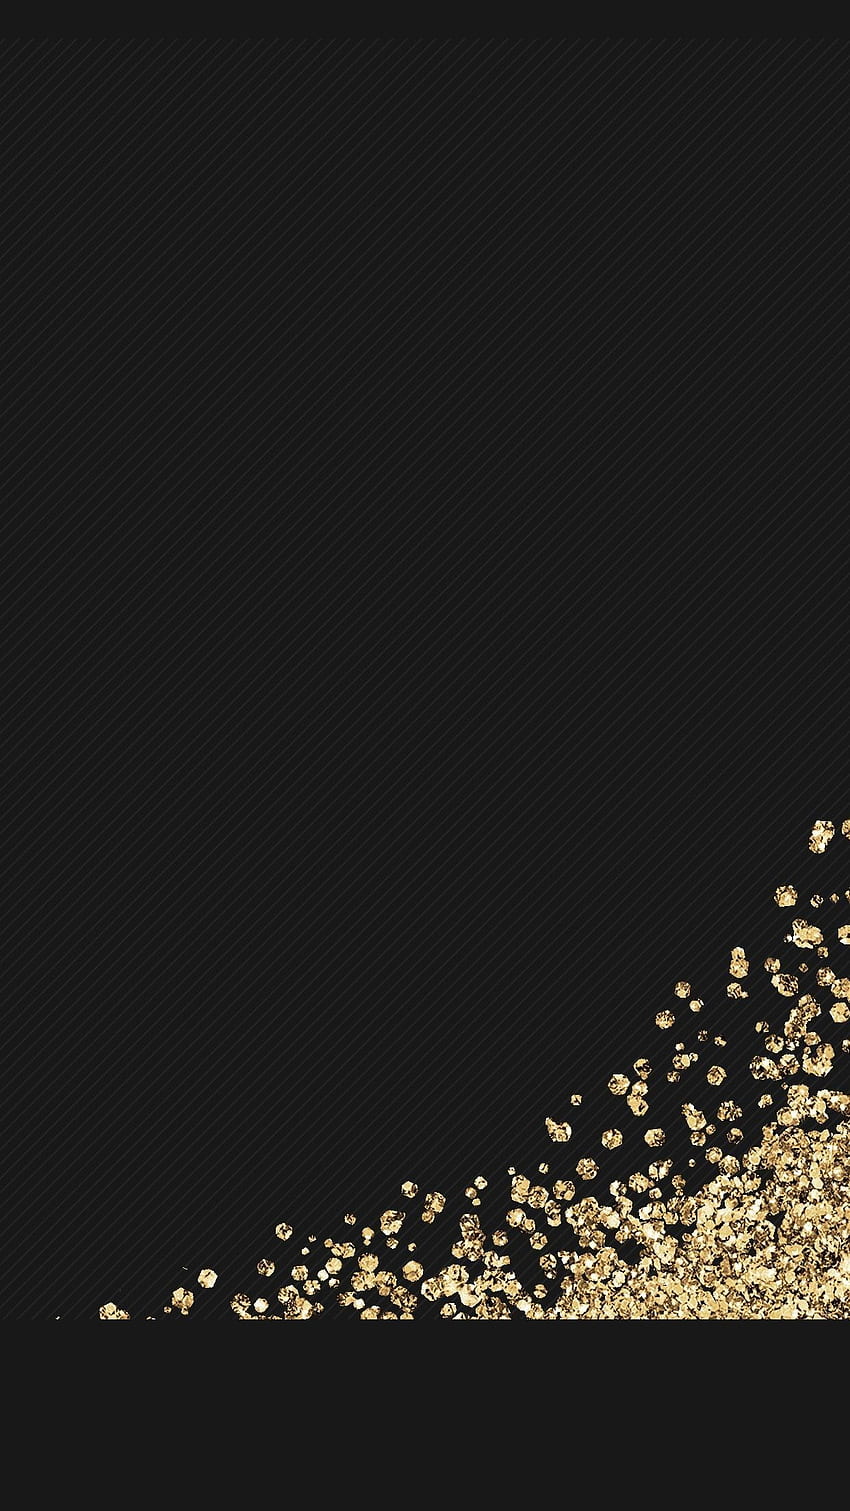 Ultra Black Gold, Elegant Black y Gold fondo de pantalla del teléfono